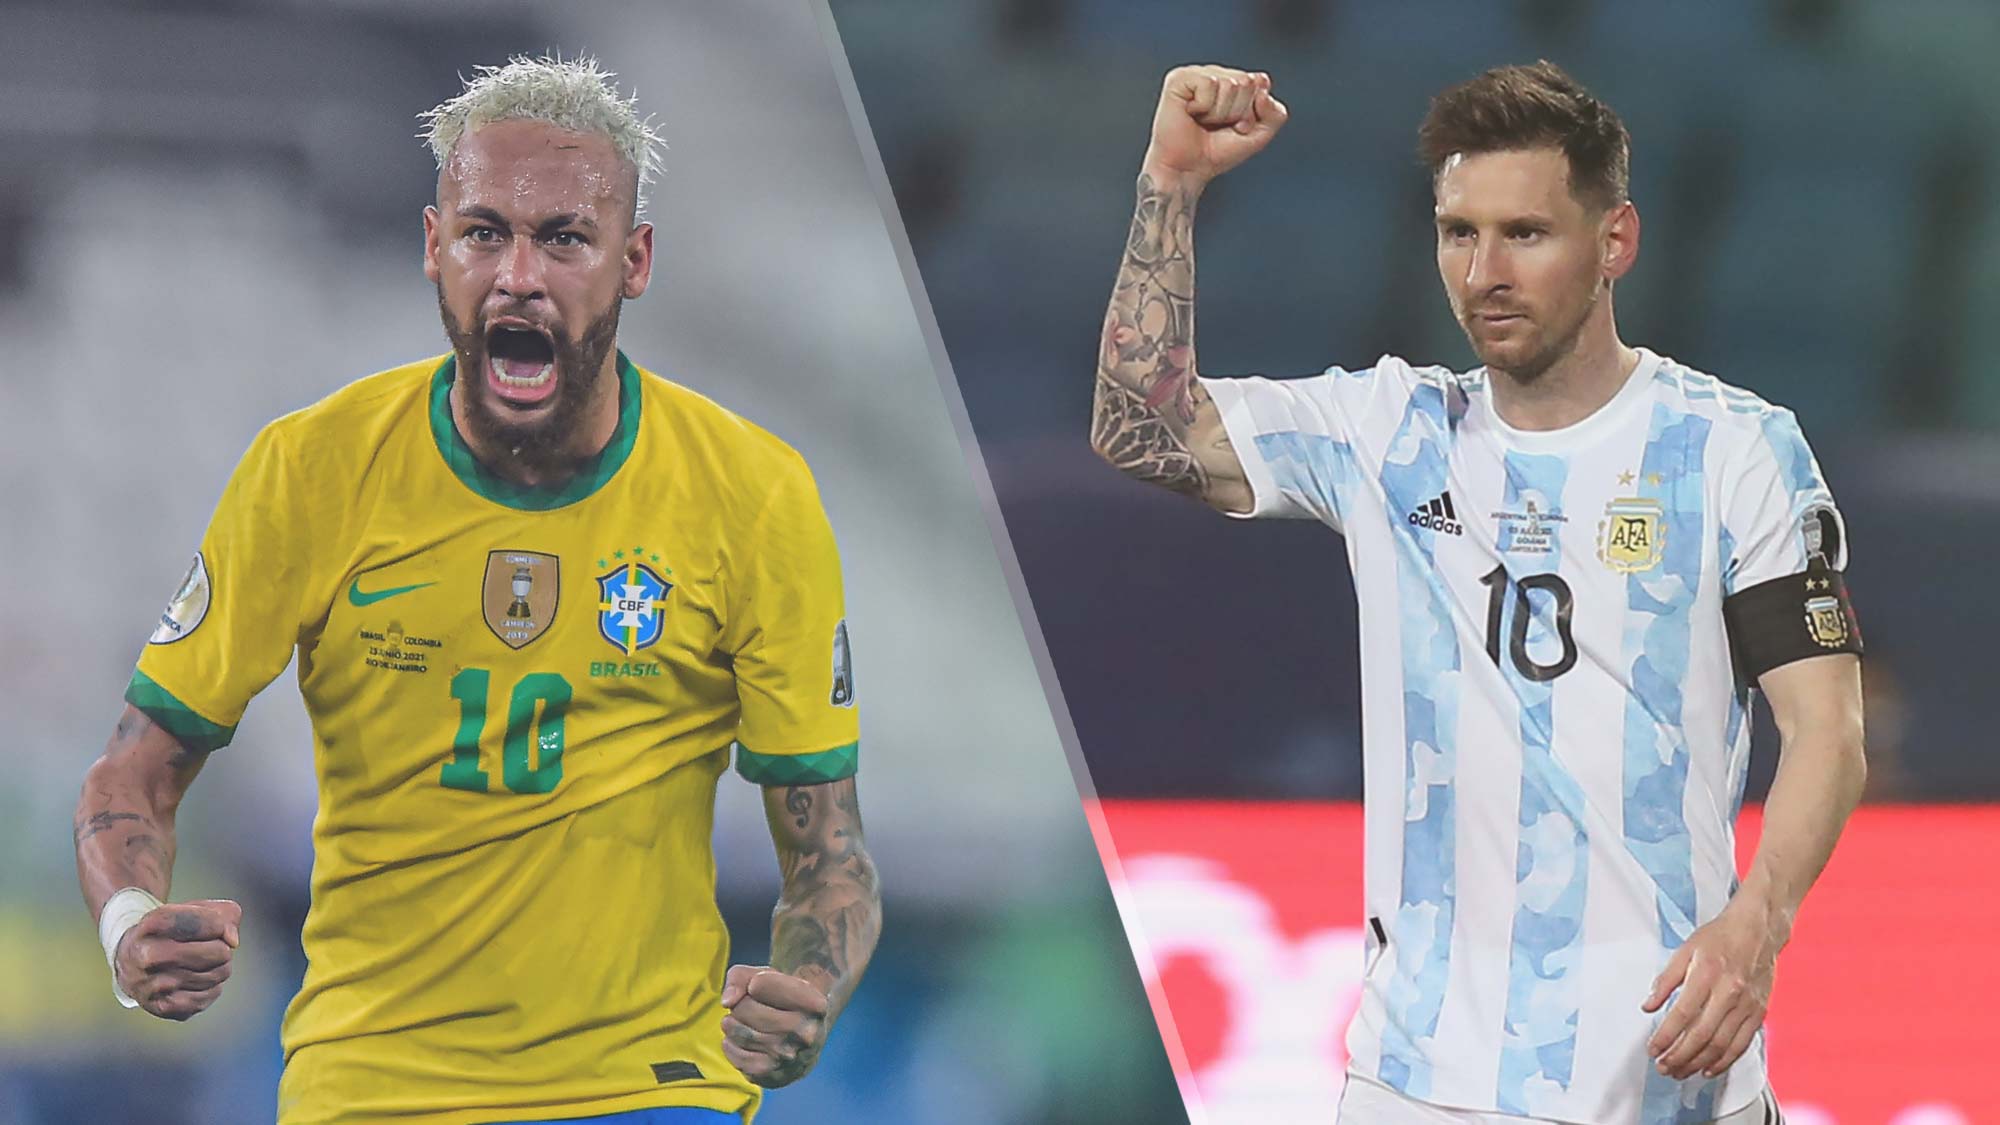 America vs copa argentina brazil Watch the